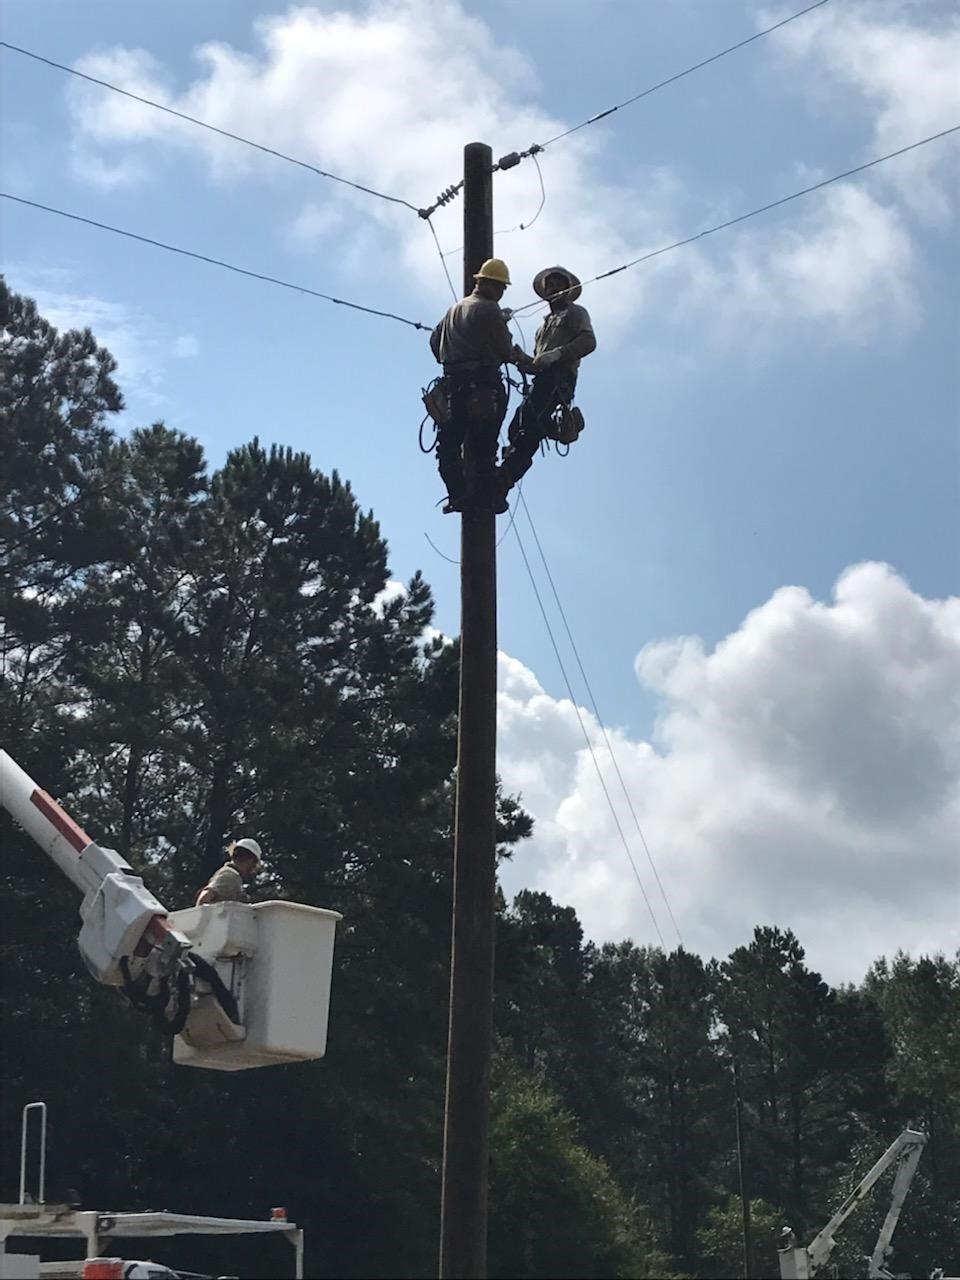 Workers on Pole Repairing Power Lines